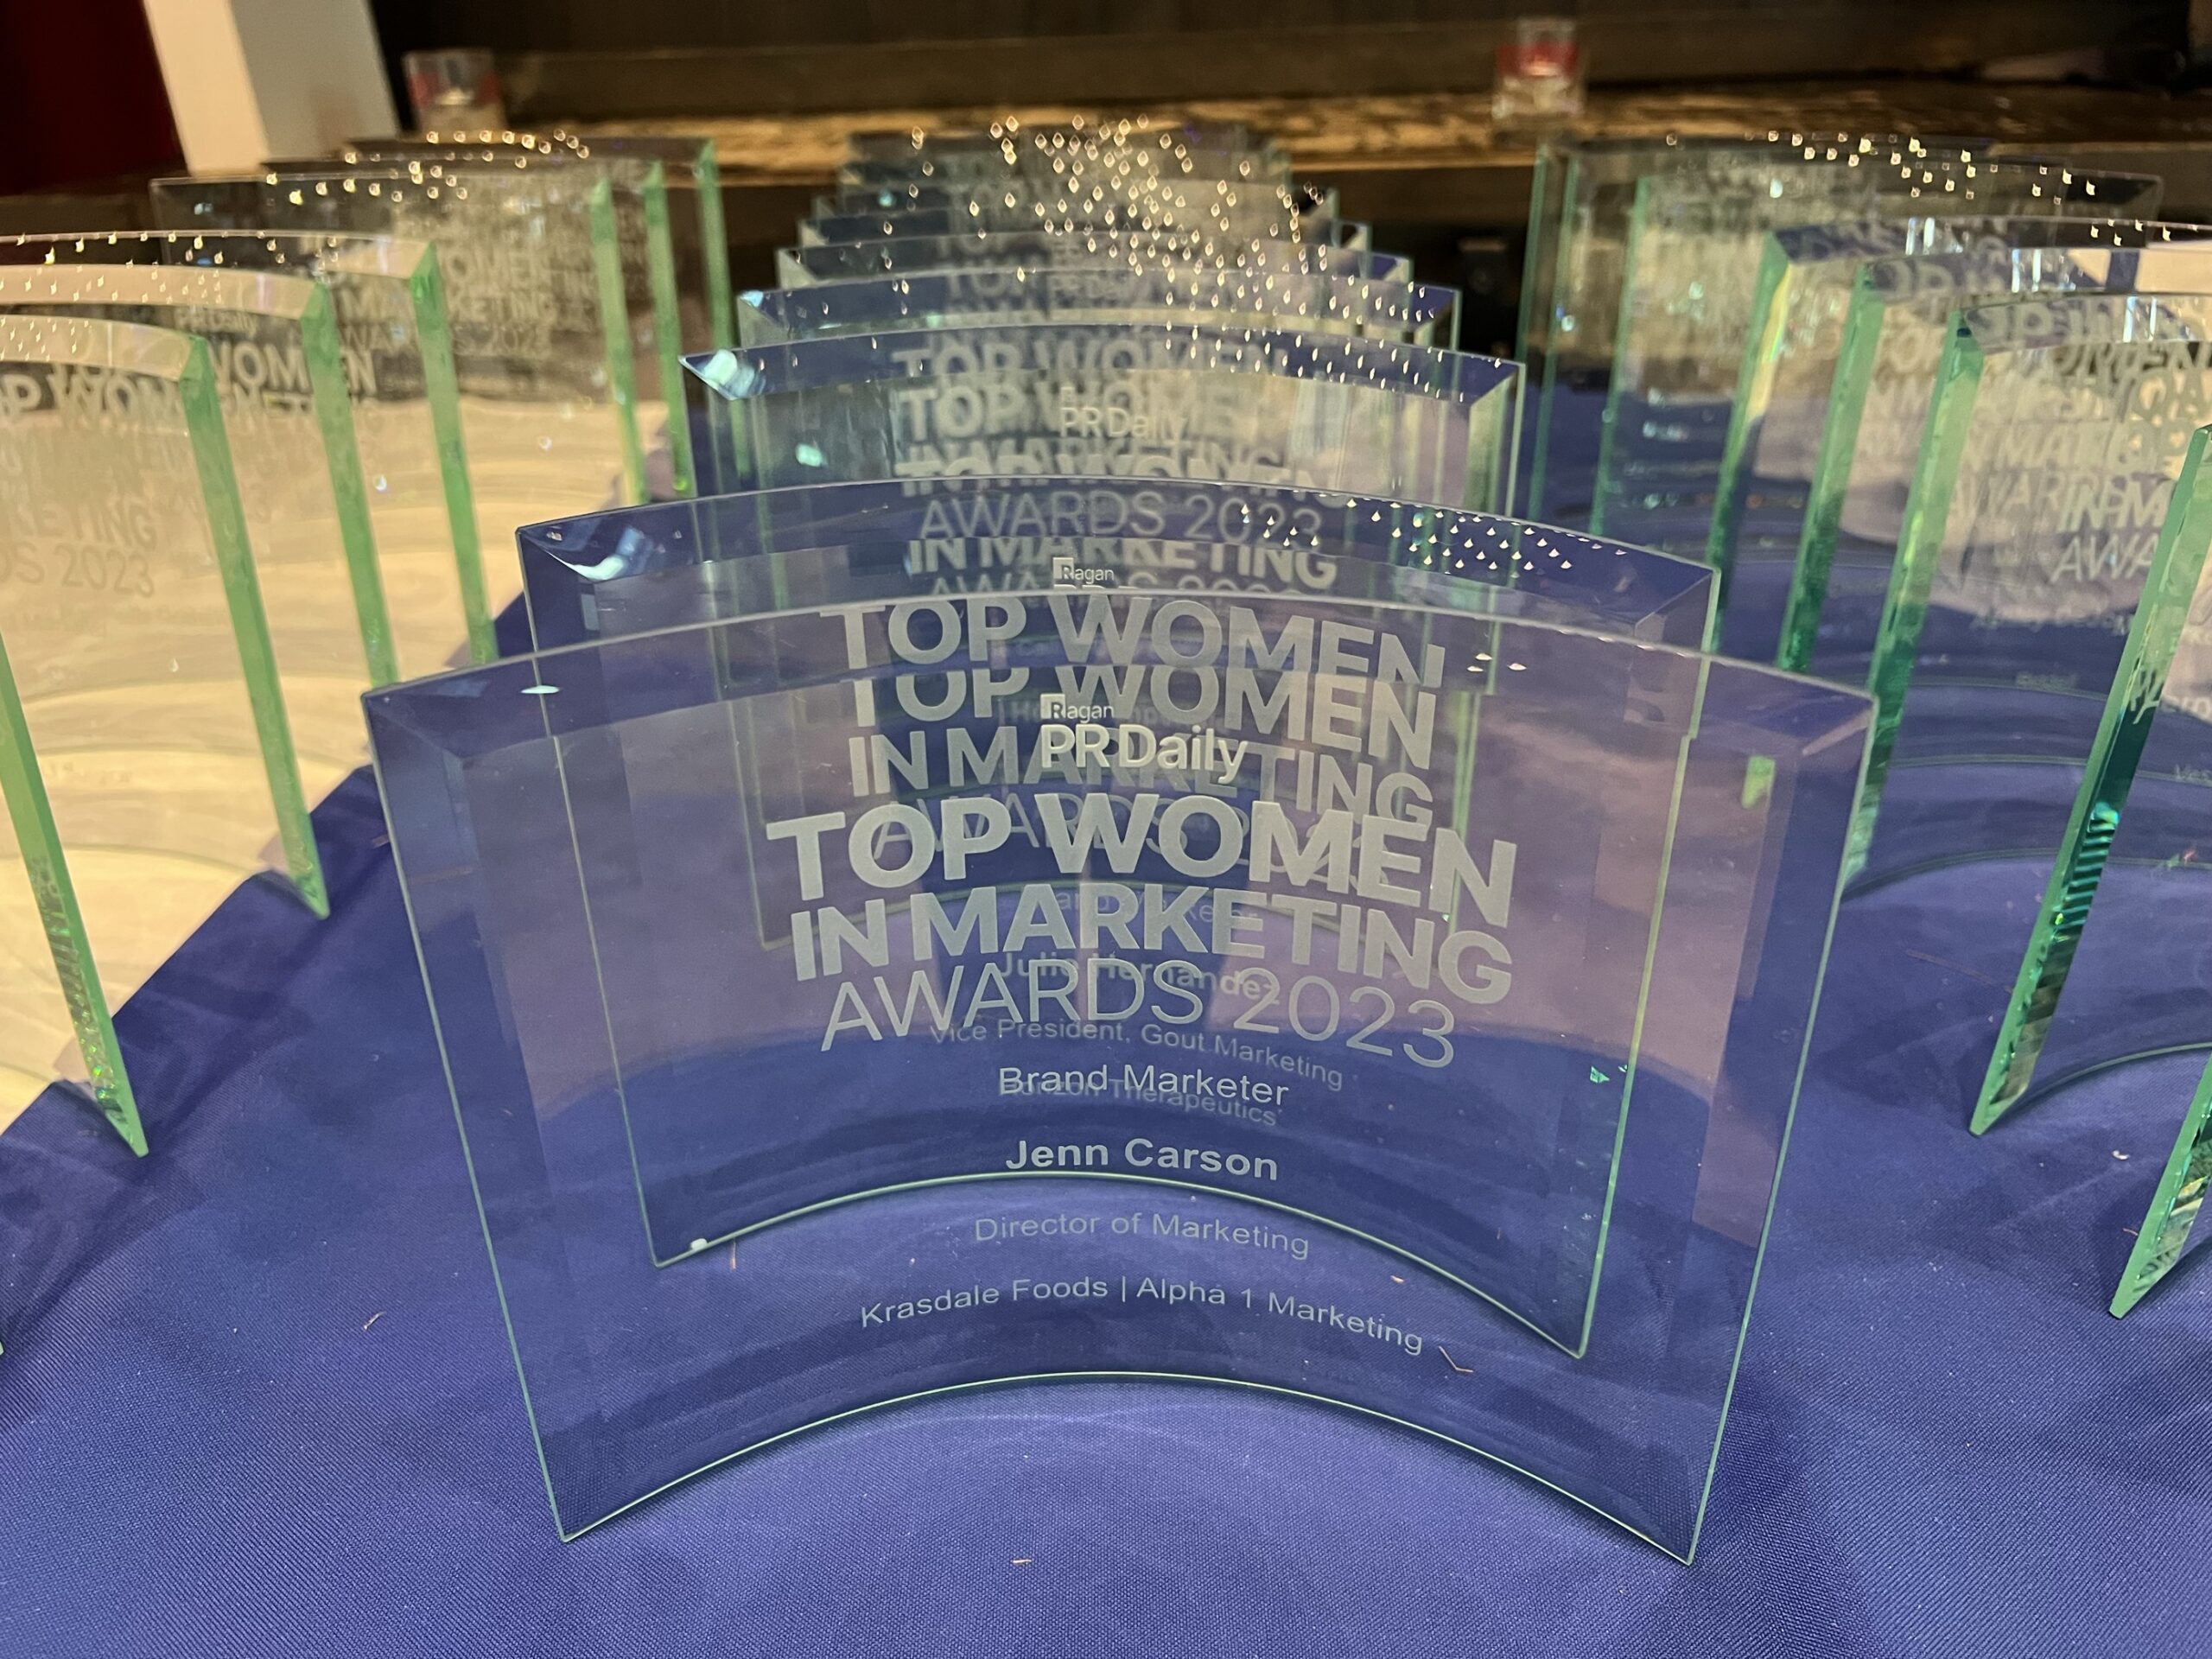 Top Women in Marketing Awards